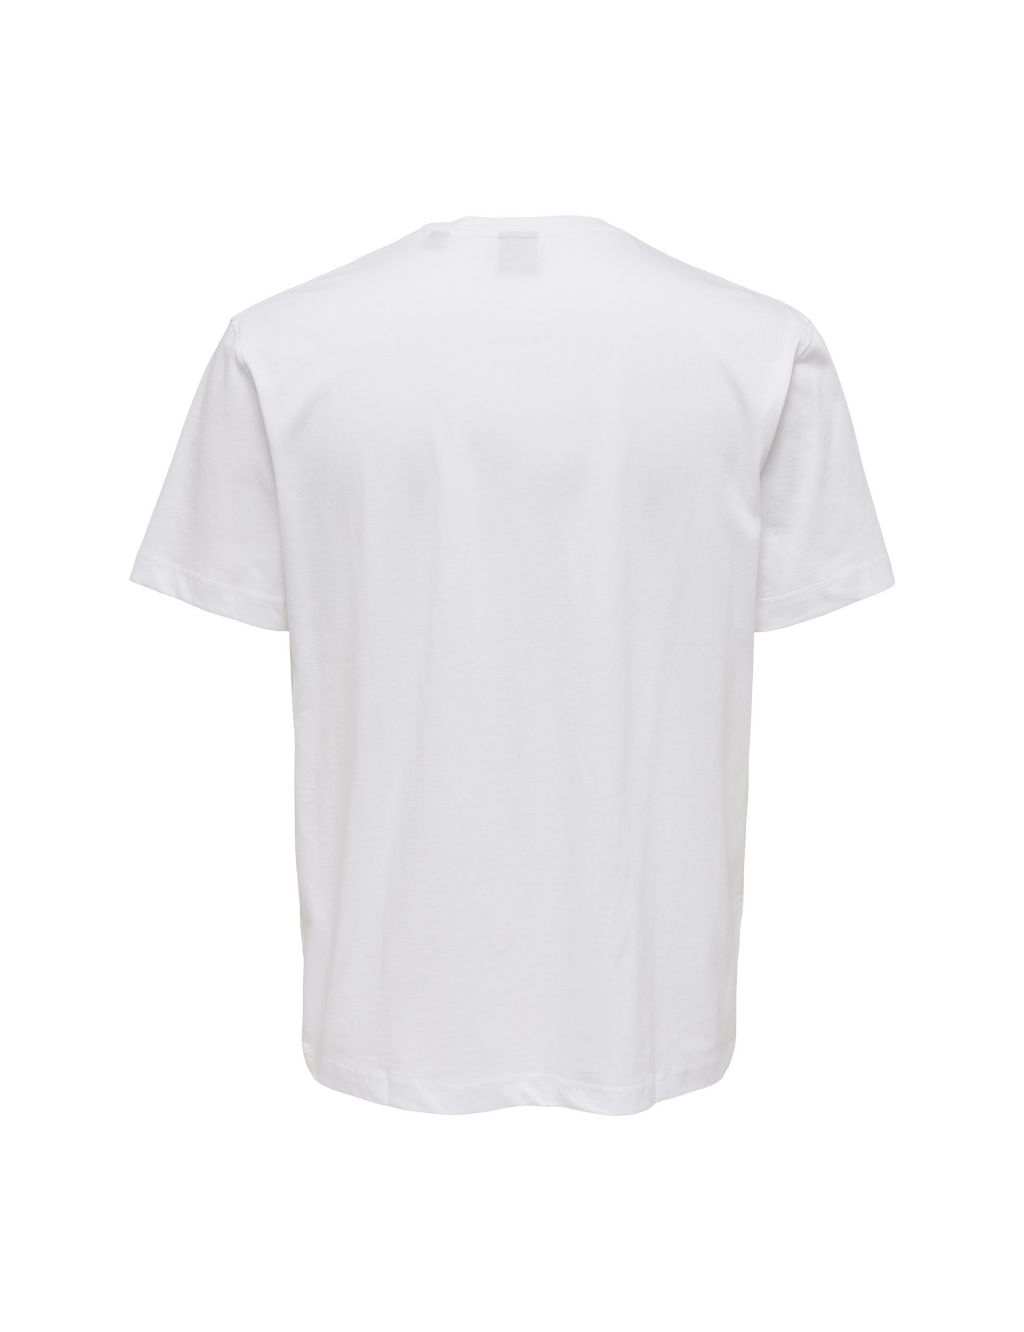 Organic Cotton Crew Neck T-Shirt image 6